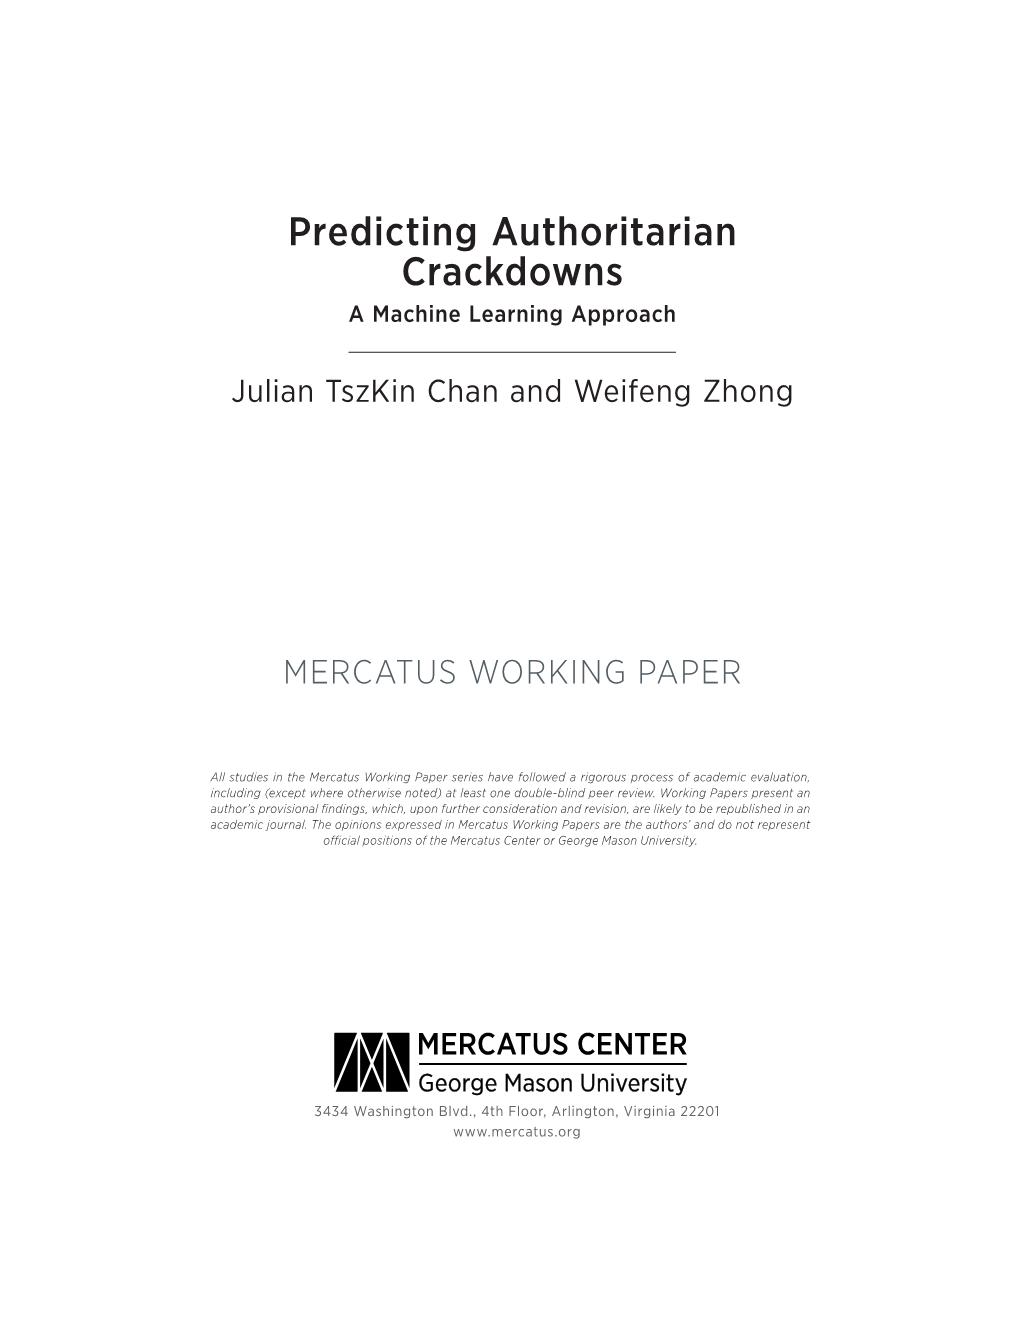 Predicting Authoritarian Crackdowns: a Machine Learning Approach.” Mercatus Working Paper, Mercatus Center at George Mason University, Arlington, VA, January 2020